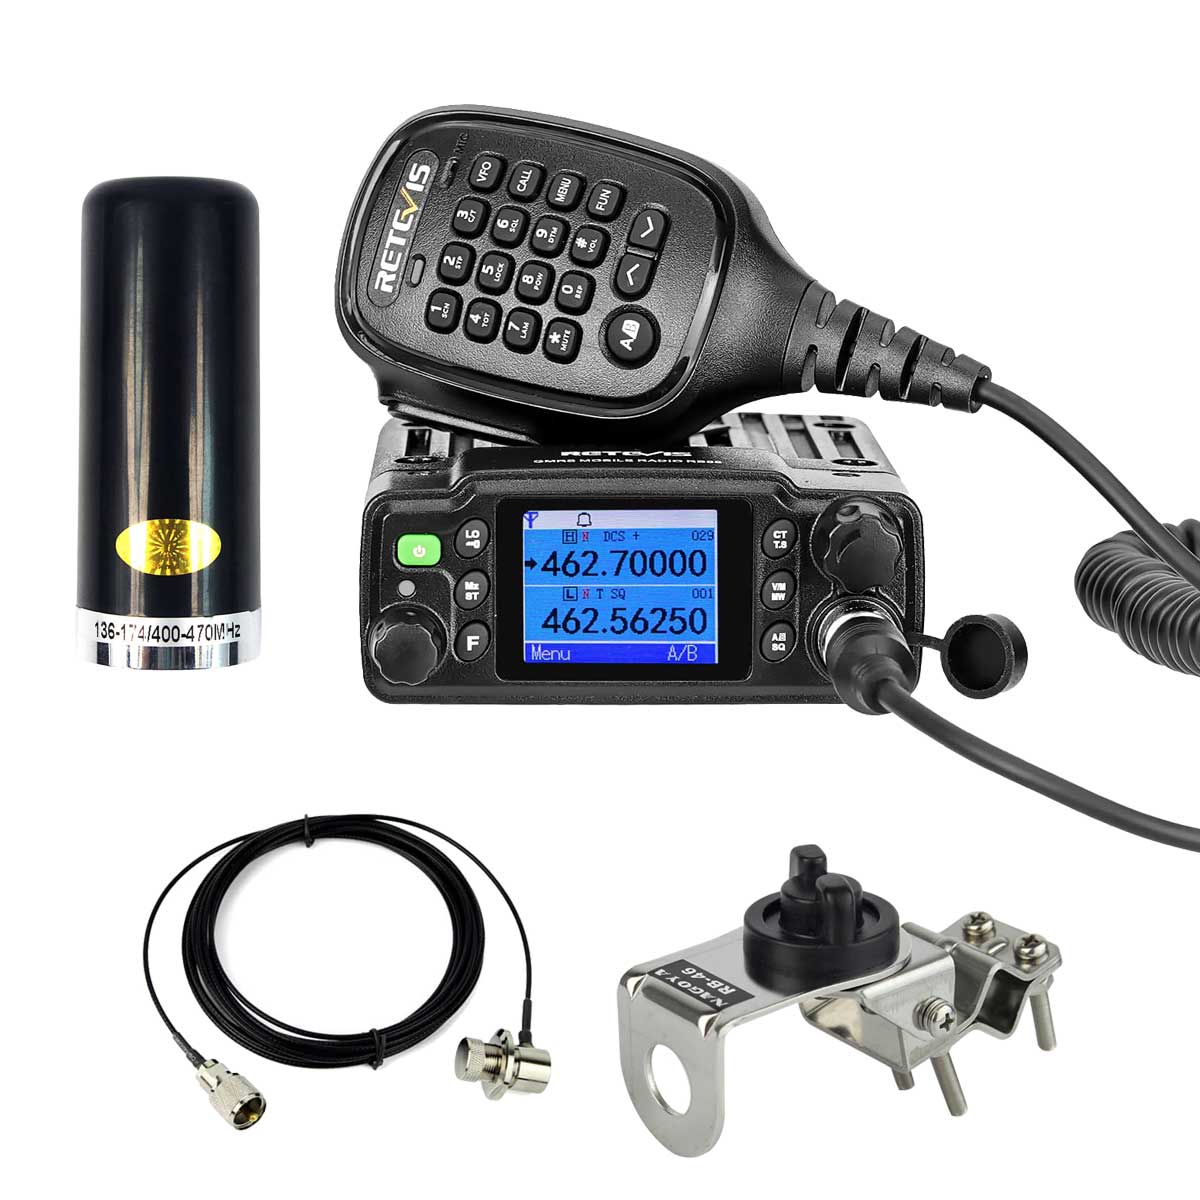 RB86 Short Antenna Kit-two way radios for farm use